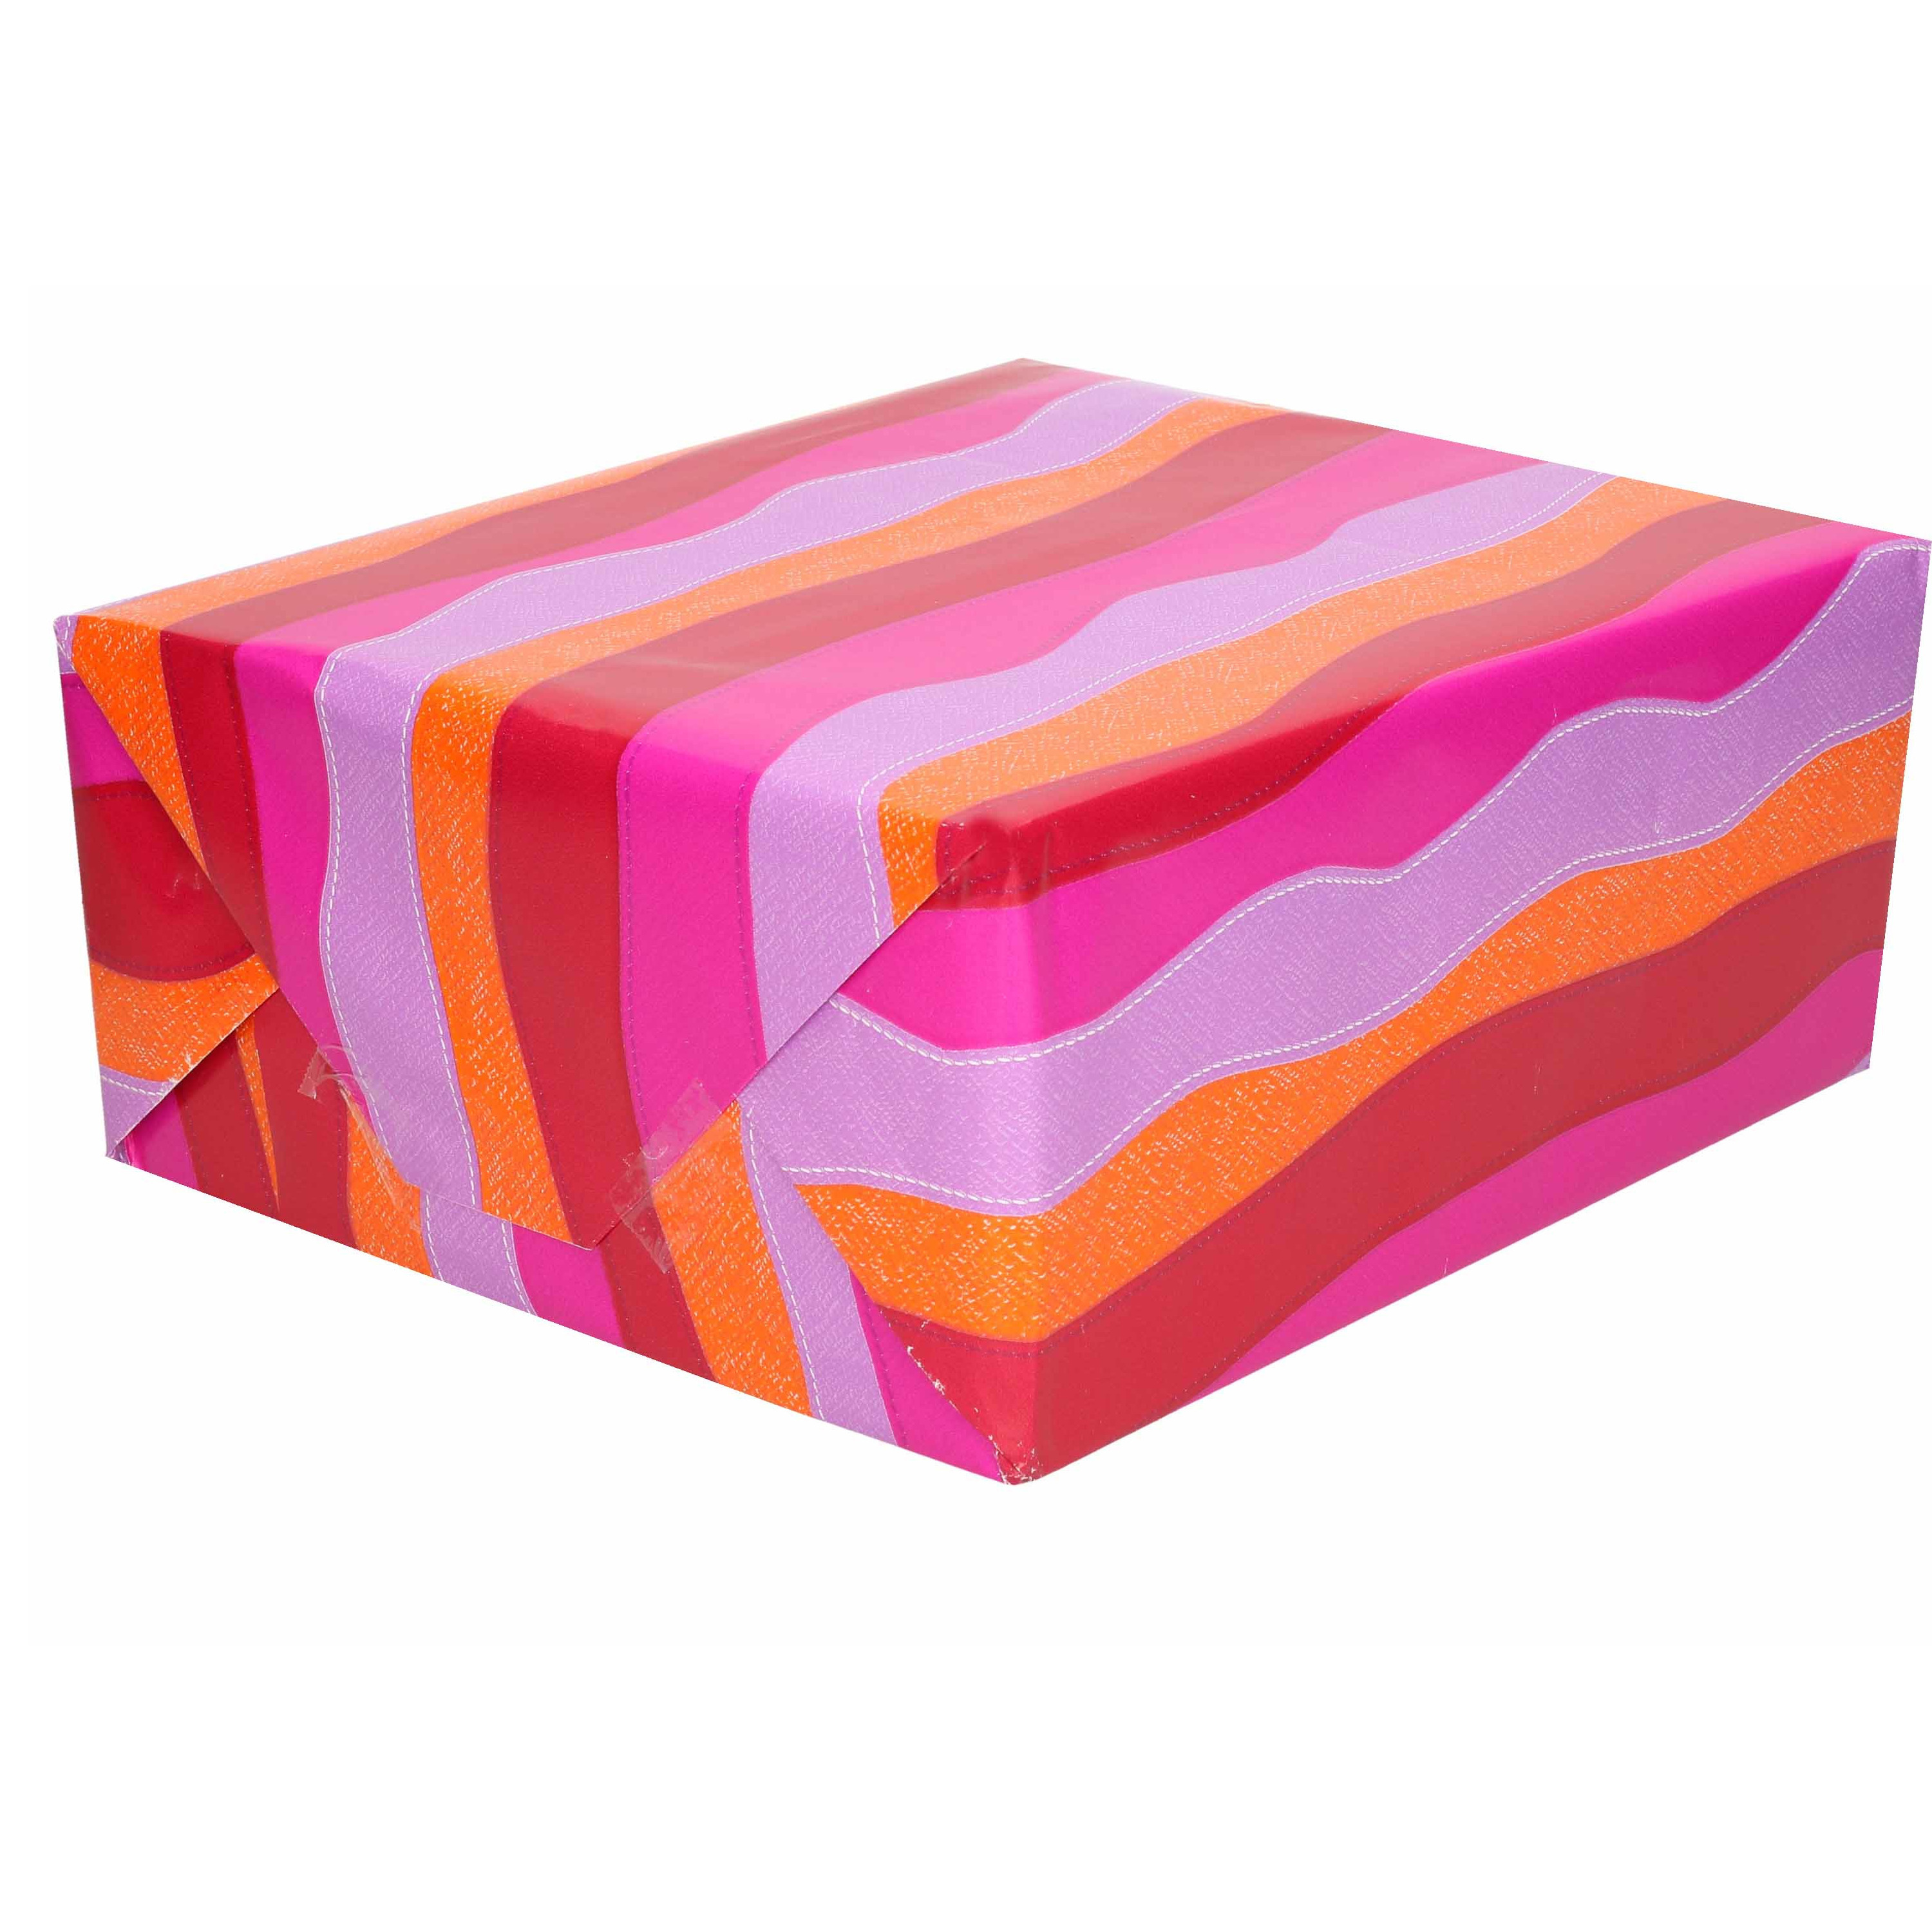 1x Inpakpapier/cadeaupapier roze/paars/oranje/rood in golf 200 x 70 cm